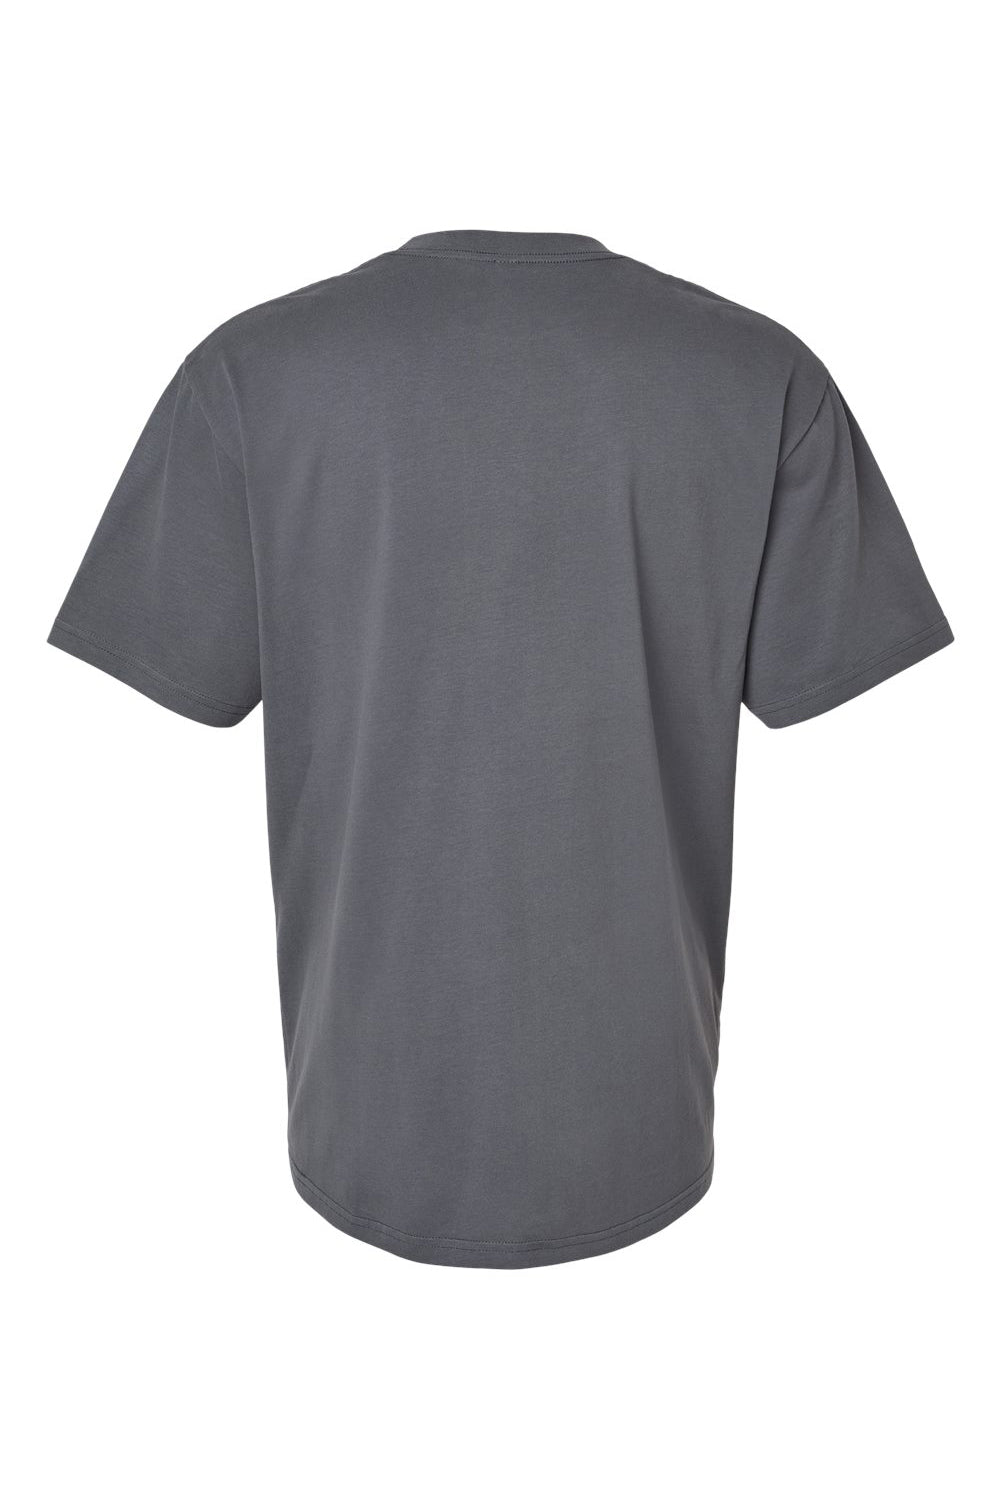 American Apparel 5389 Mens Sueded Cloud Short Sleeve Crewneck T-Shirt Sueded Asphalt Flat Back